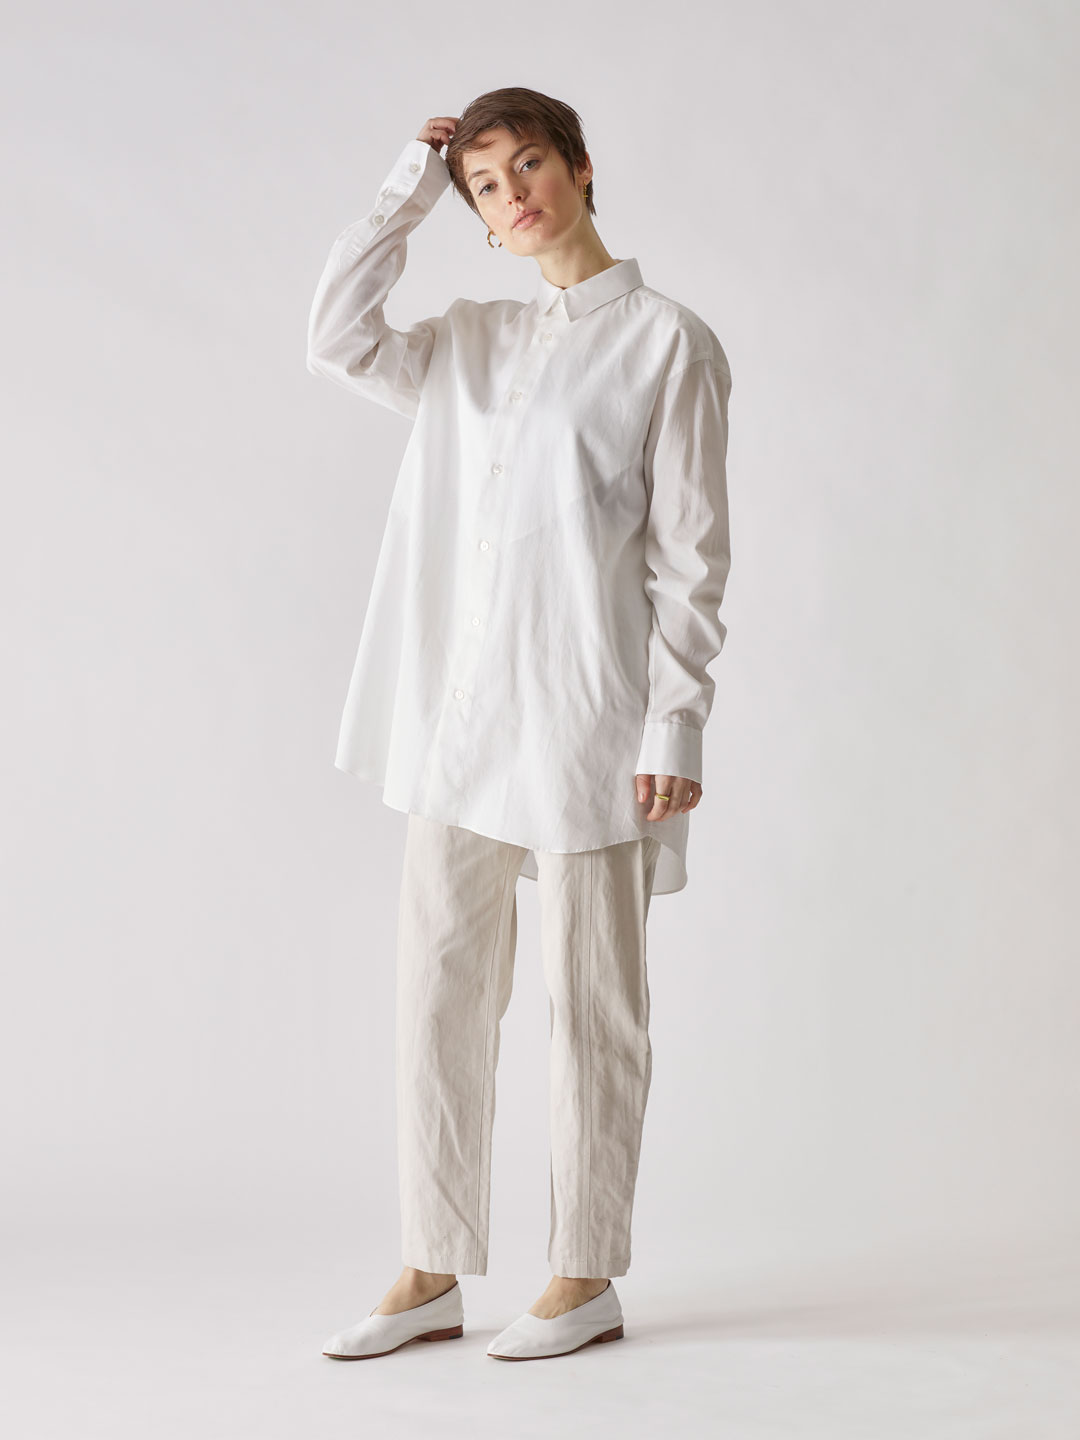 Cotton Pique Dress Shirt - White